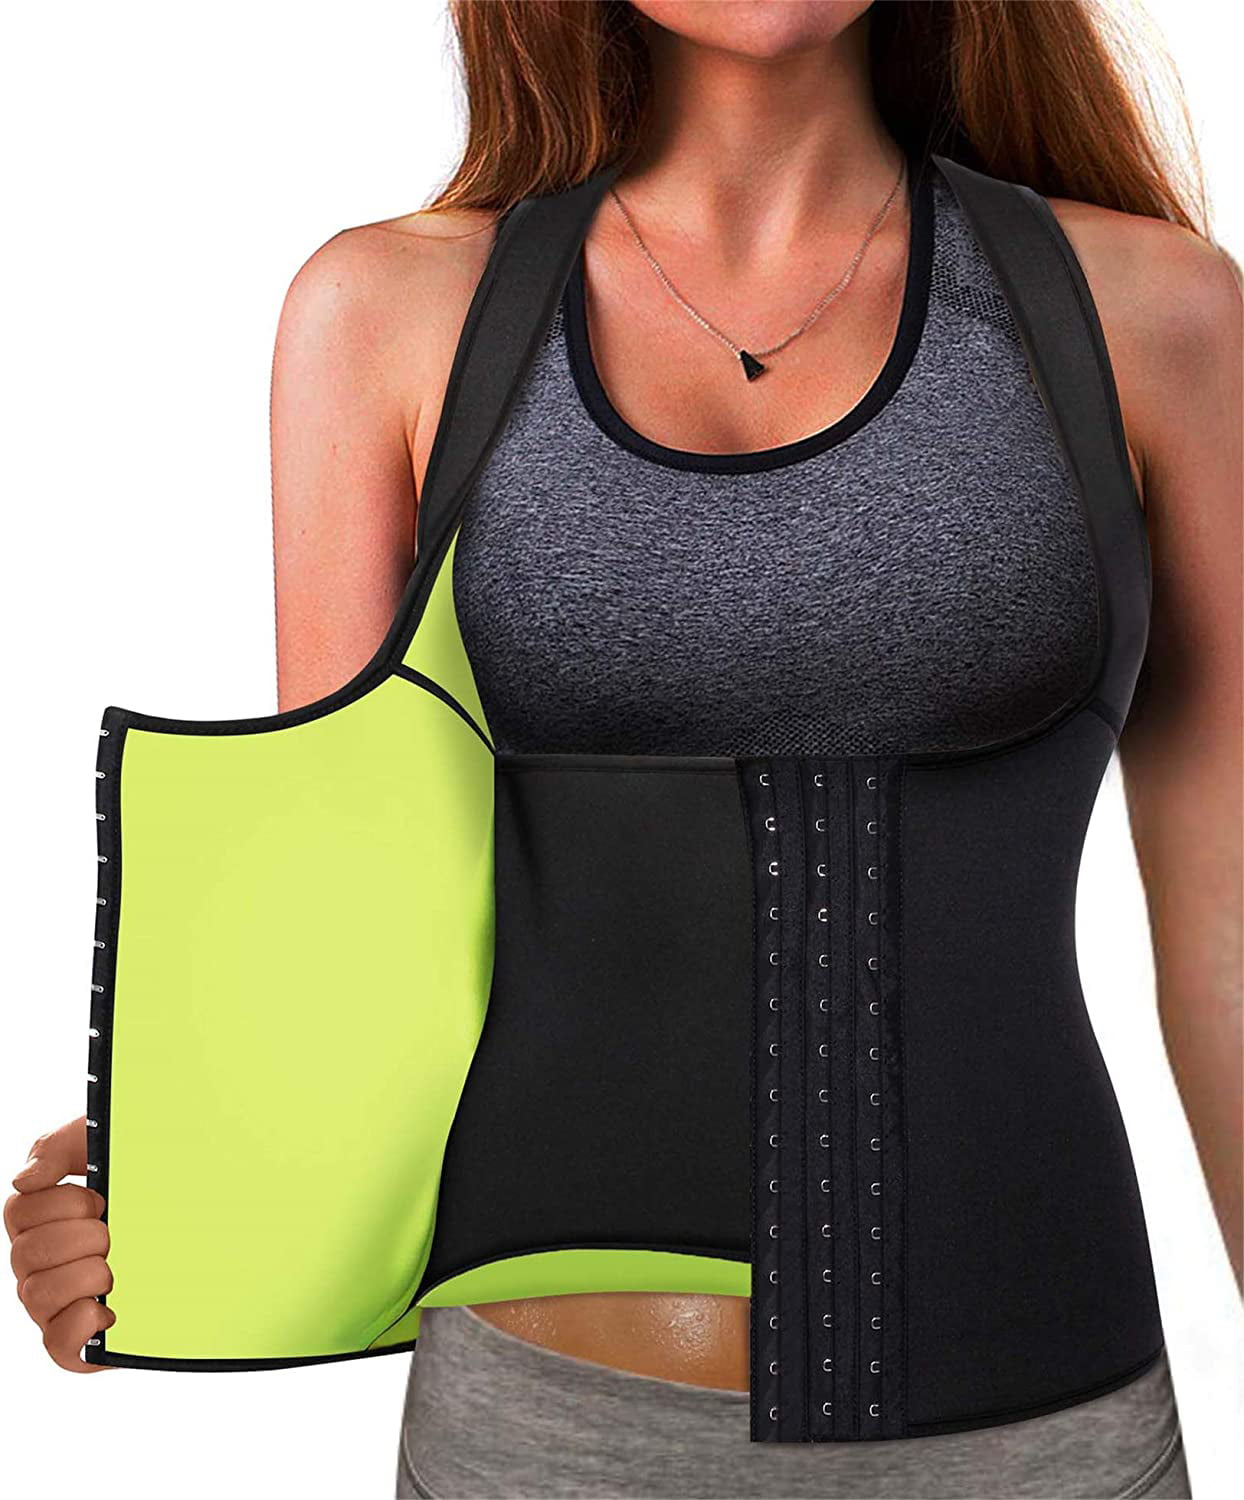 Nebility Women Waist Trainer Vest Breathable Shapewear Weight Loss Tank Top Shirt Workout Corset 